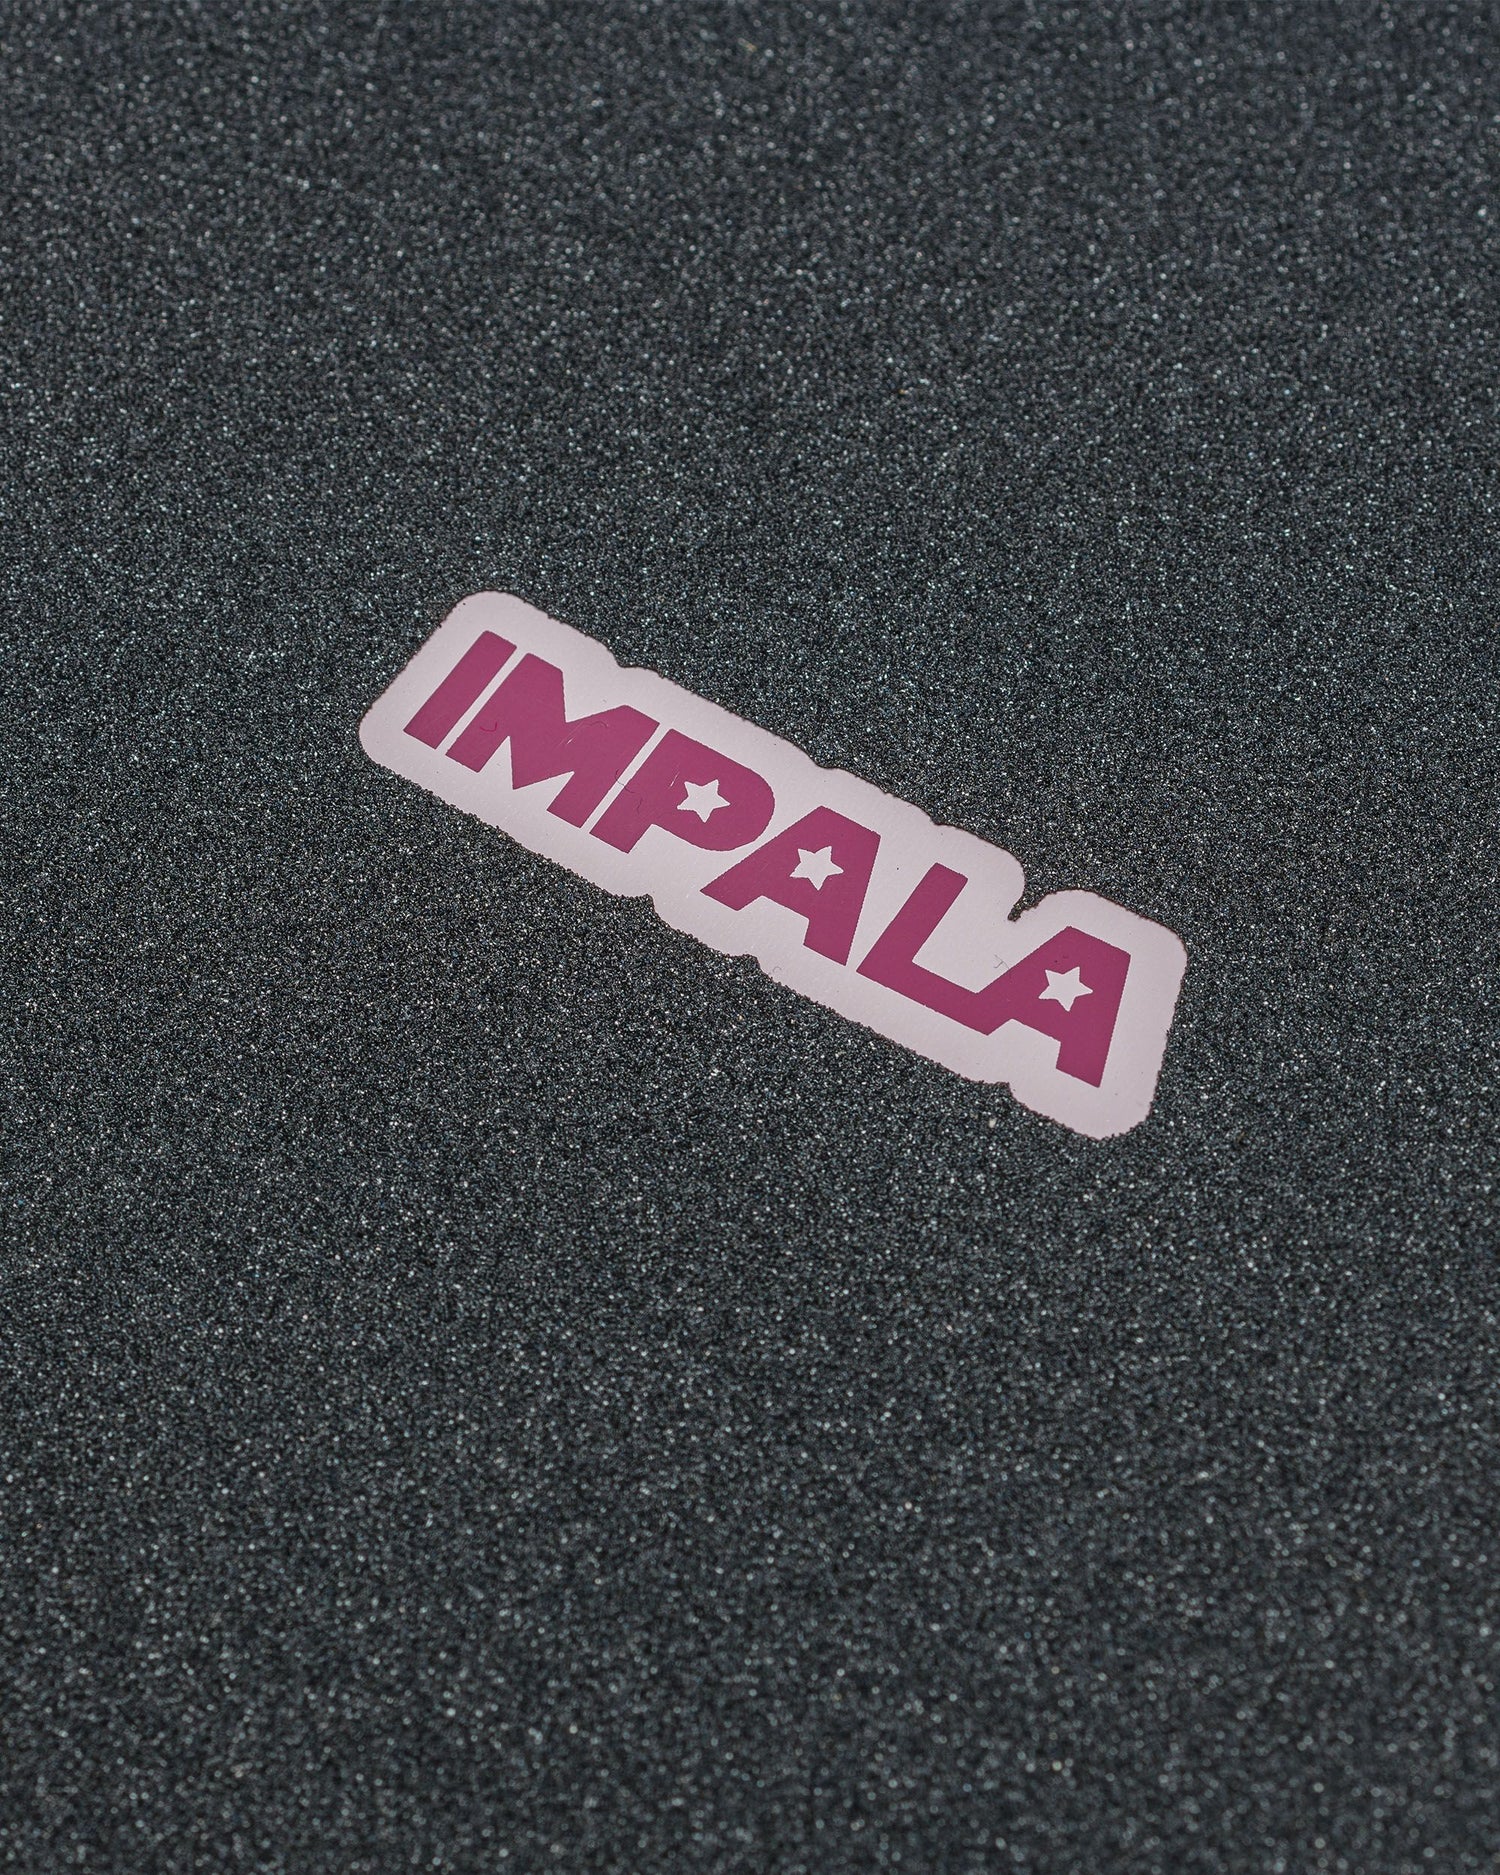 Grip tape detailing of Impala Saturn Skateboard - Robin Eisenberg Space